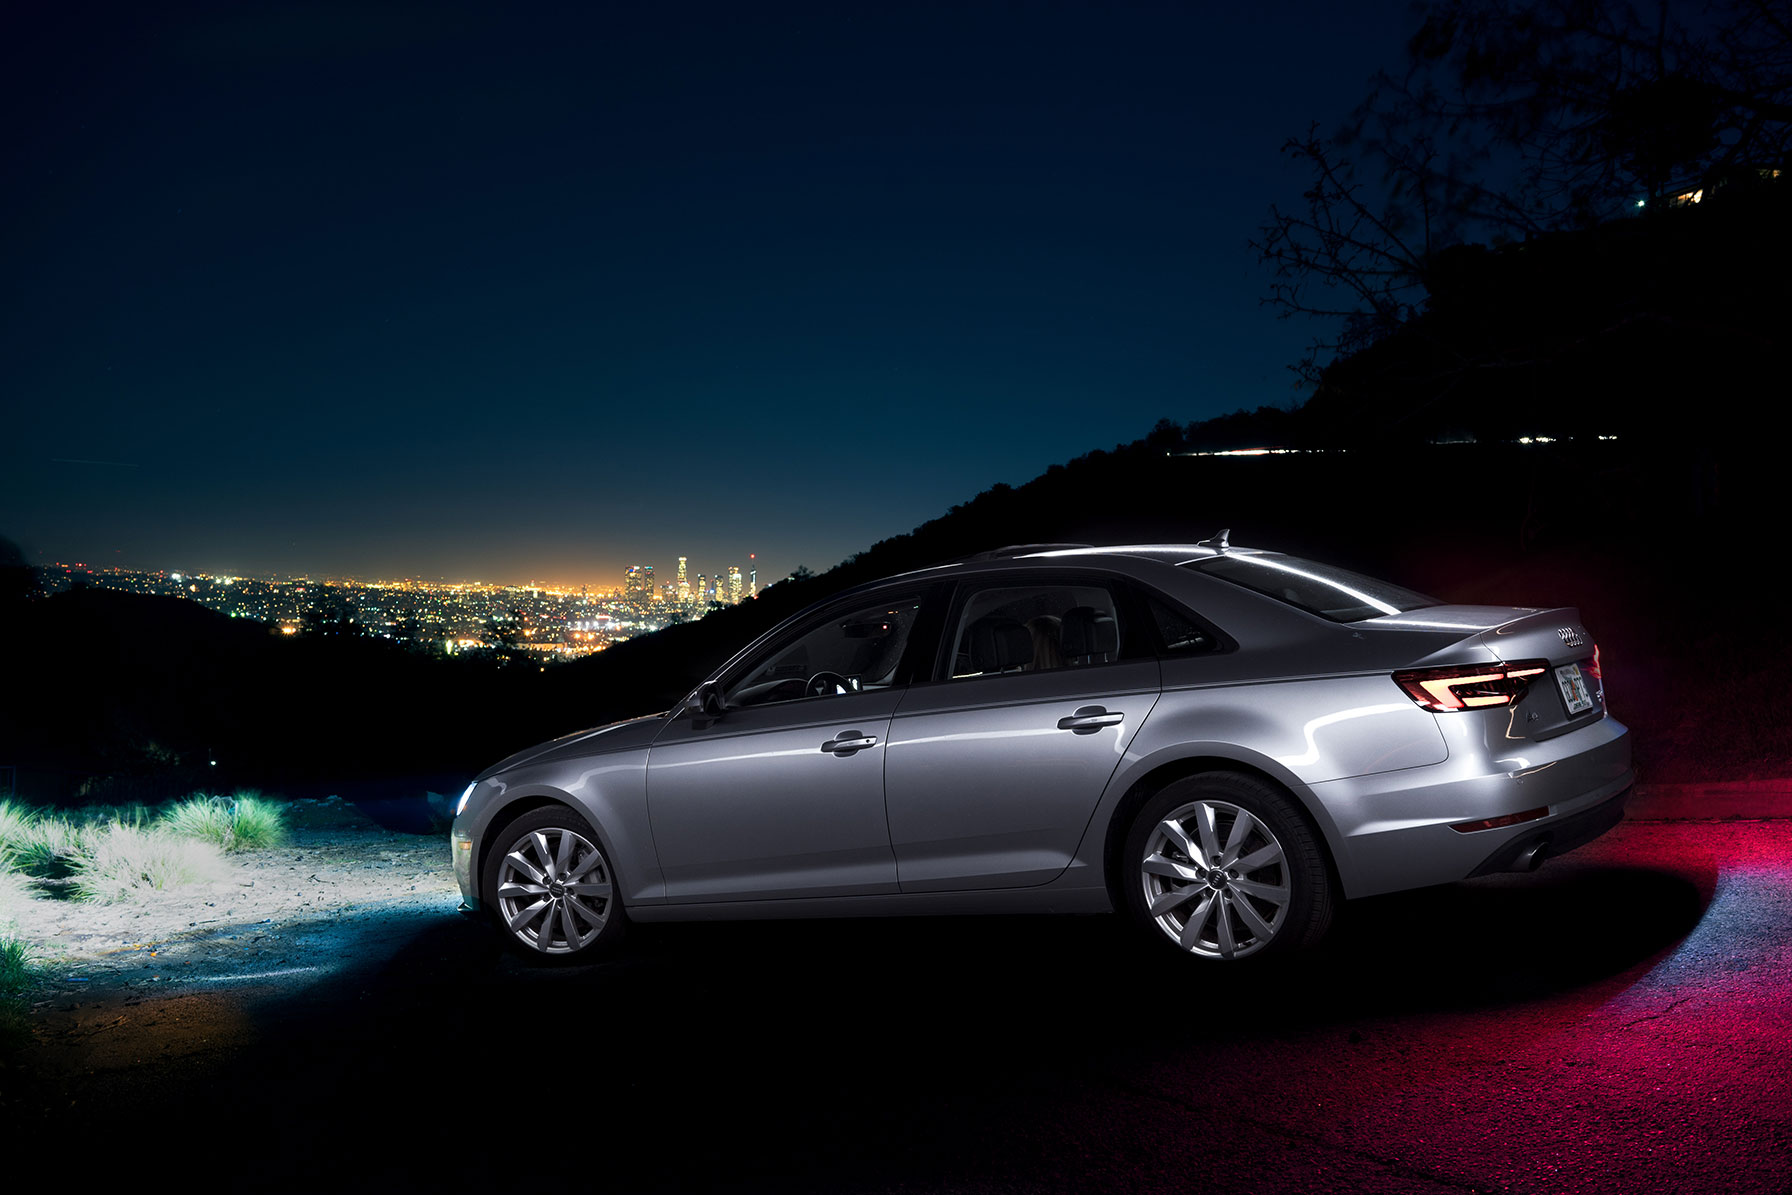 SilverCar Audi at night